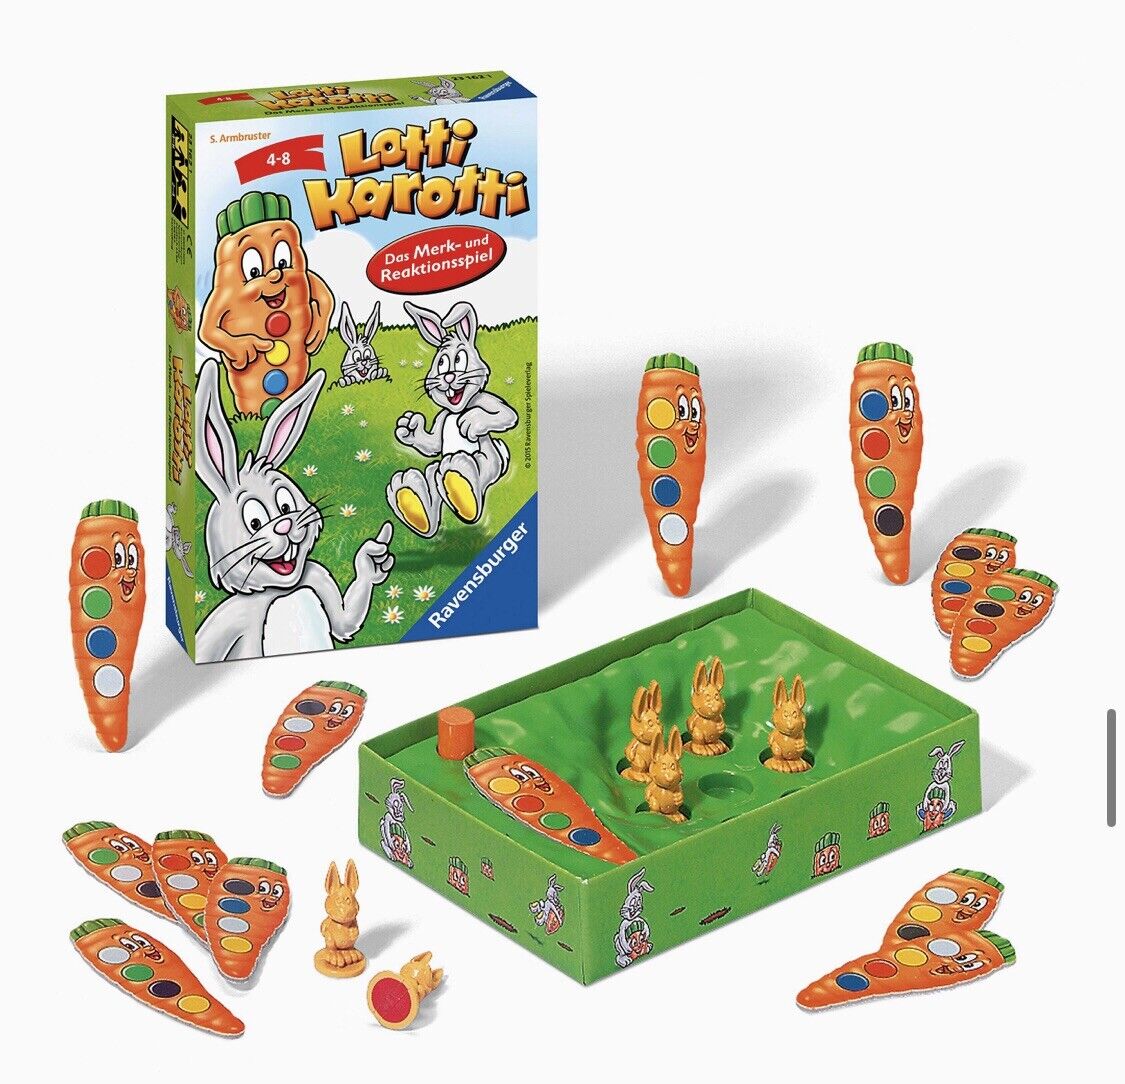 Lotti Karotti Ravensburger Game Children\'s Rabbit Store G&S Fun Rainbow 4-8 German – Years